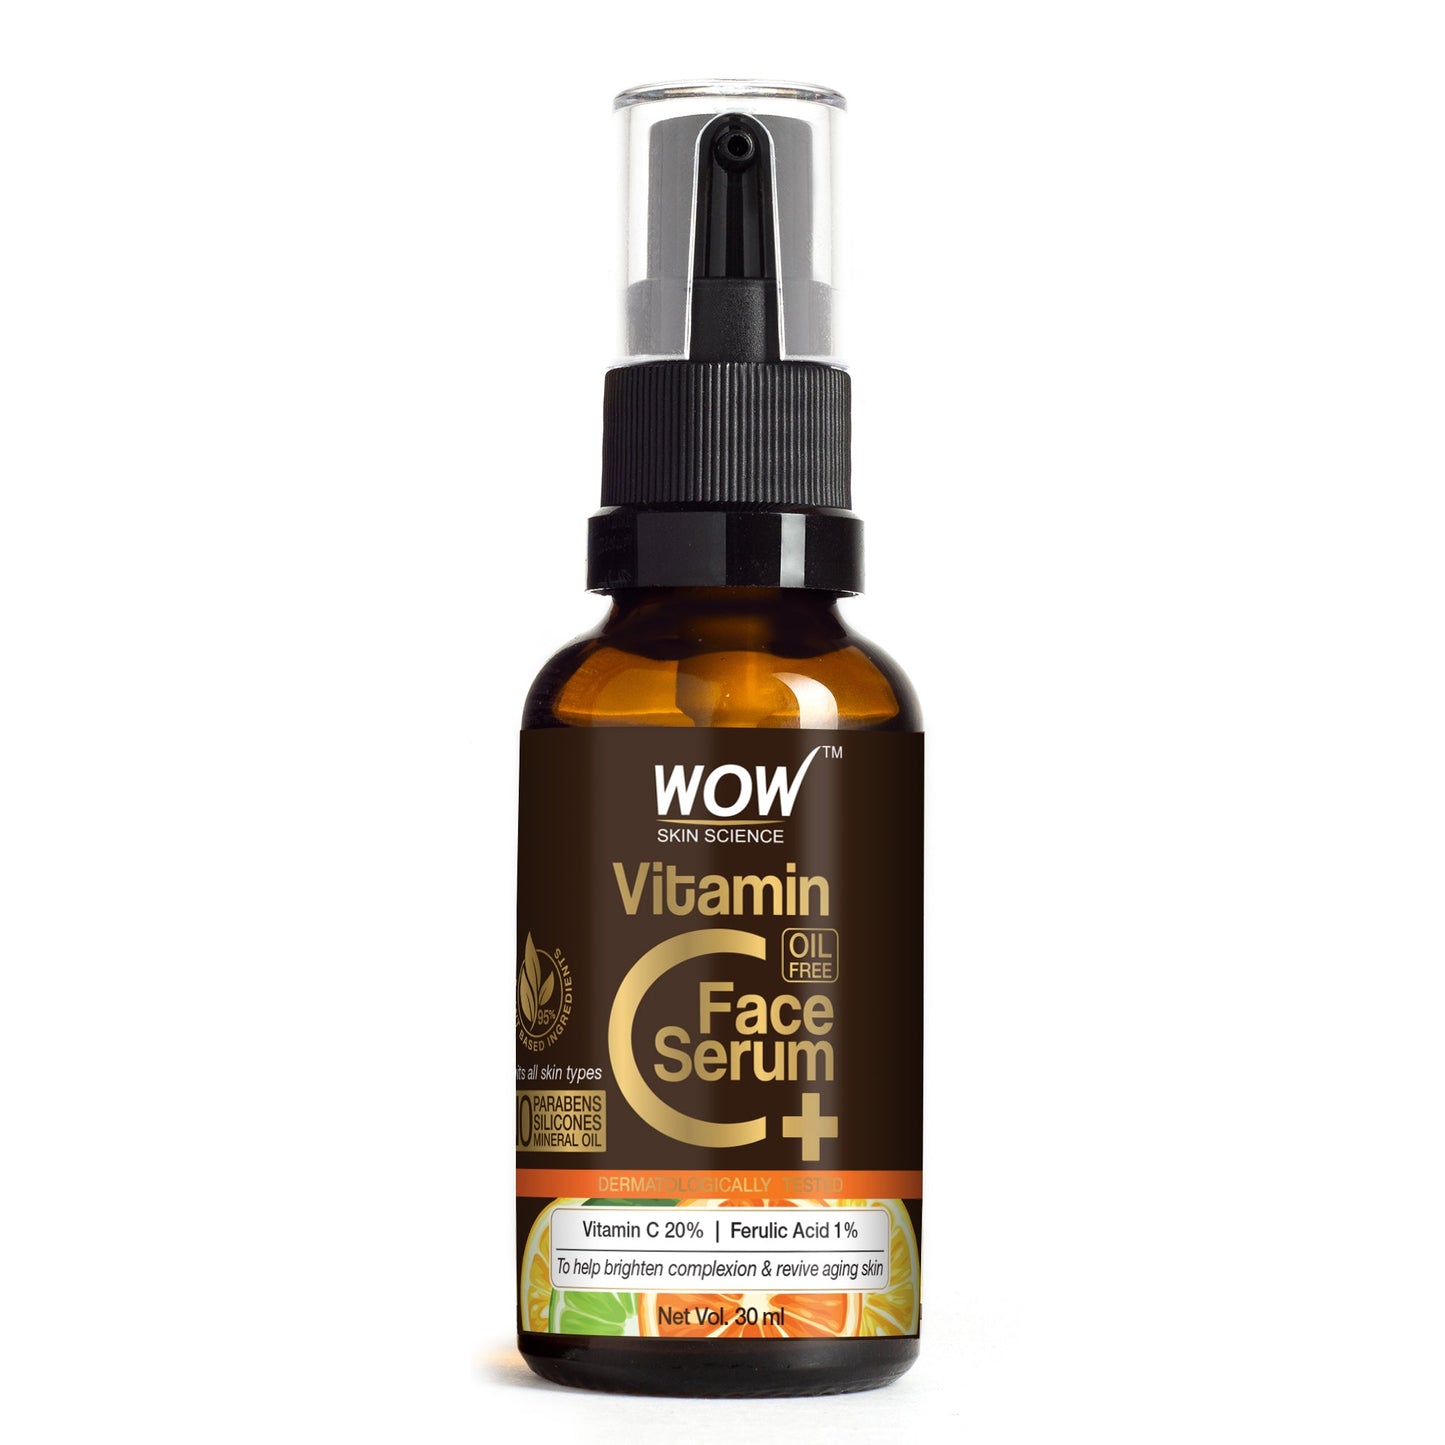 WOW Skin Science Vitamin C Face Serum - 30ml